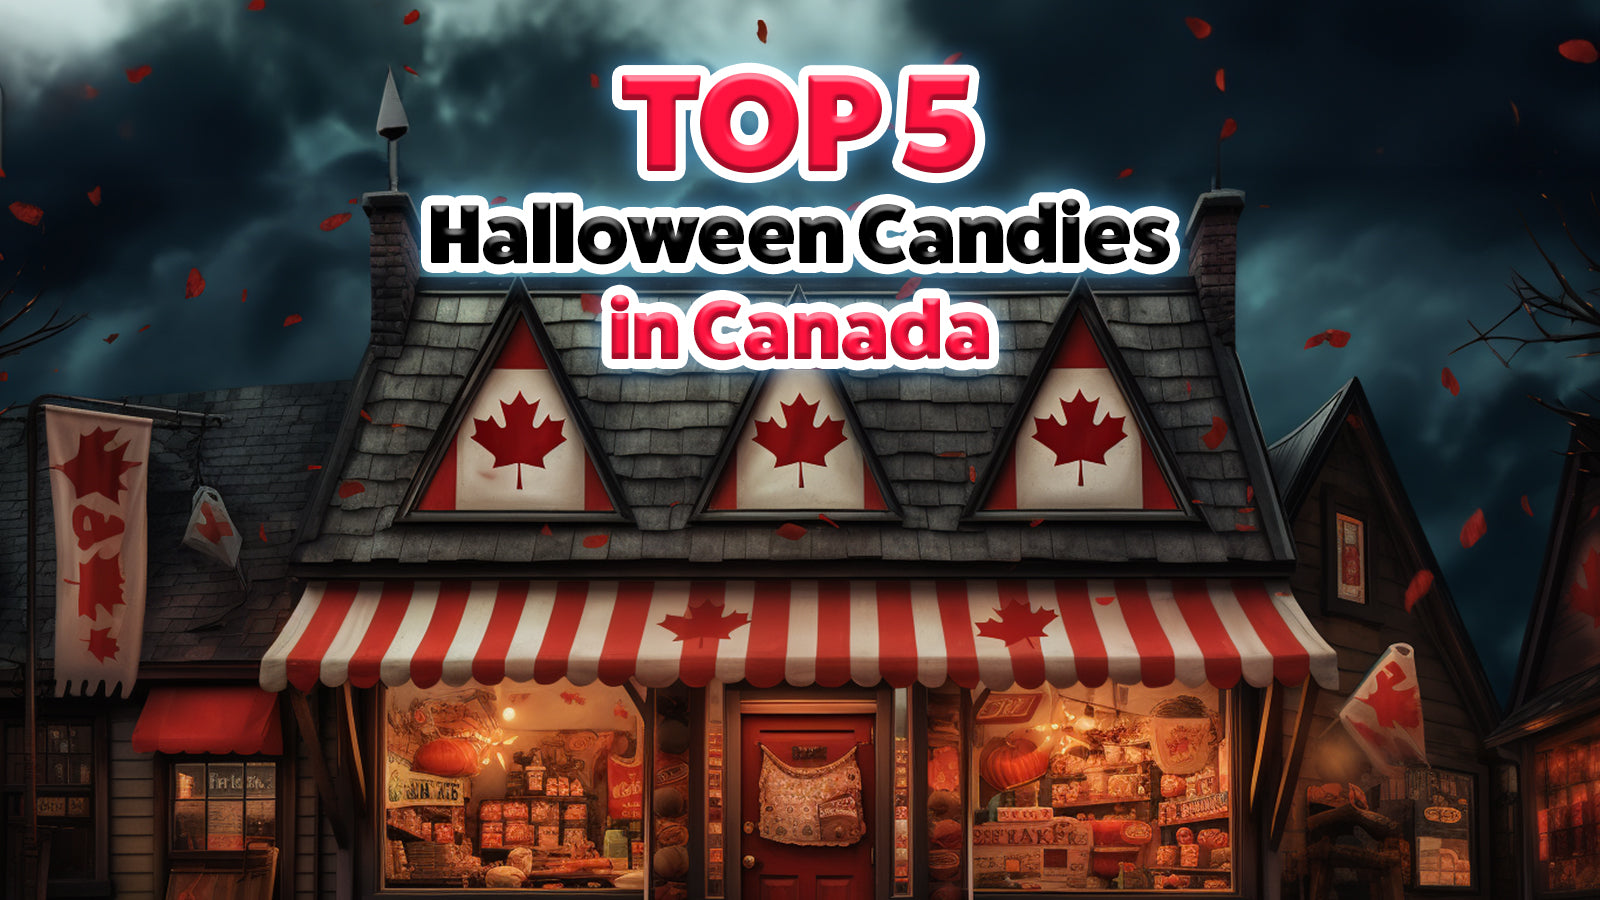 Popular Candies - Popular Halloween Candy - Popular Halloween Candies - Best Halloween Candies in Canada